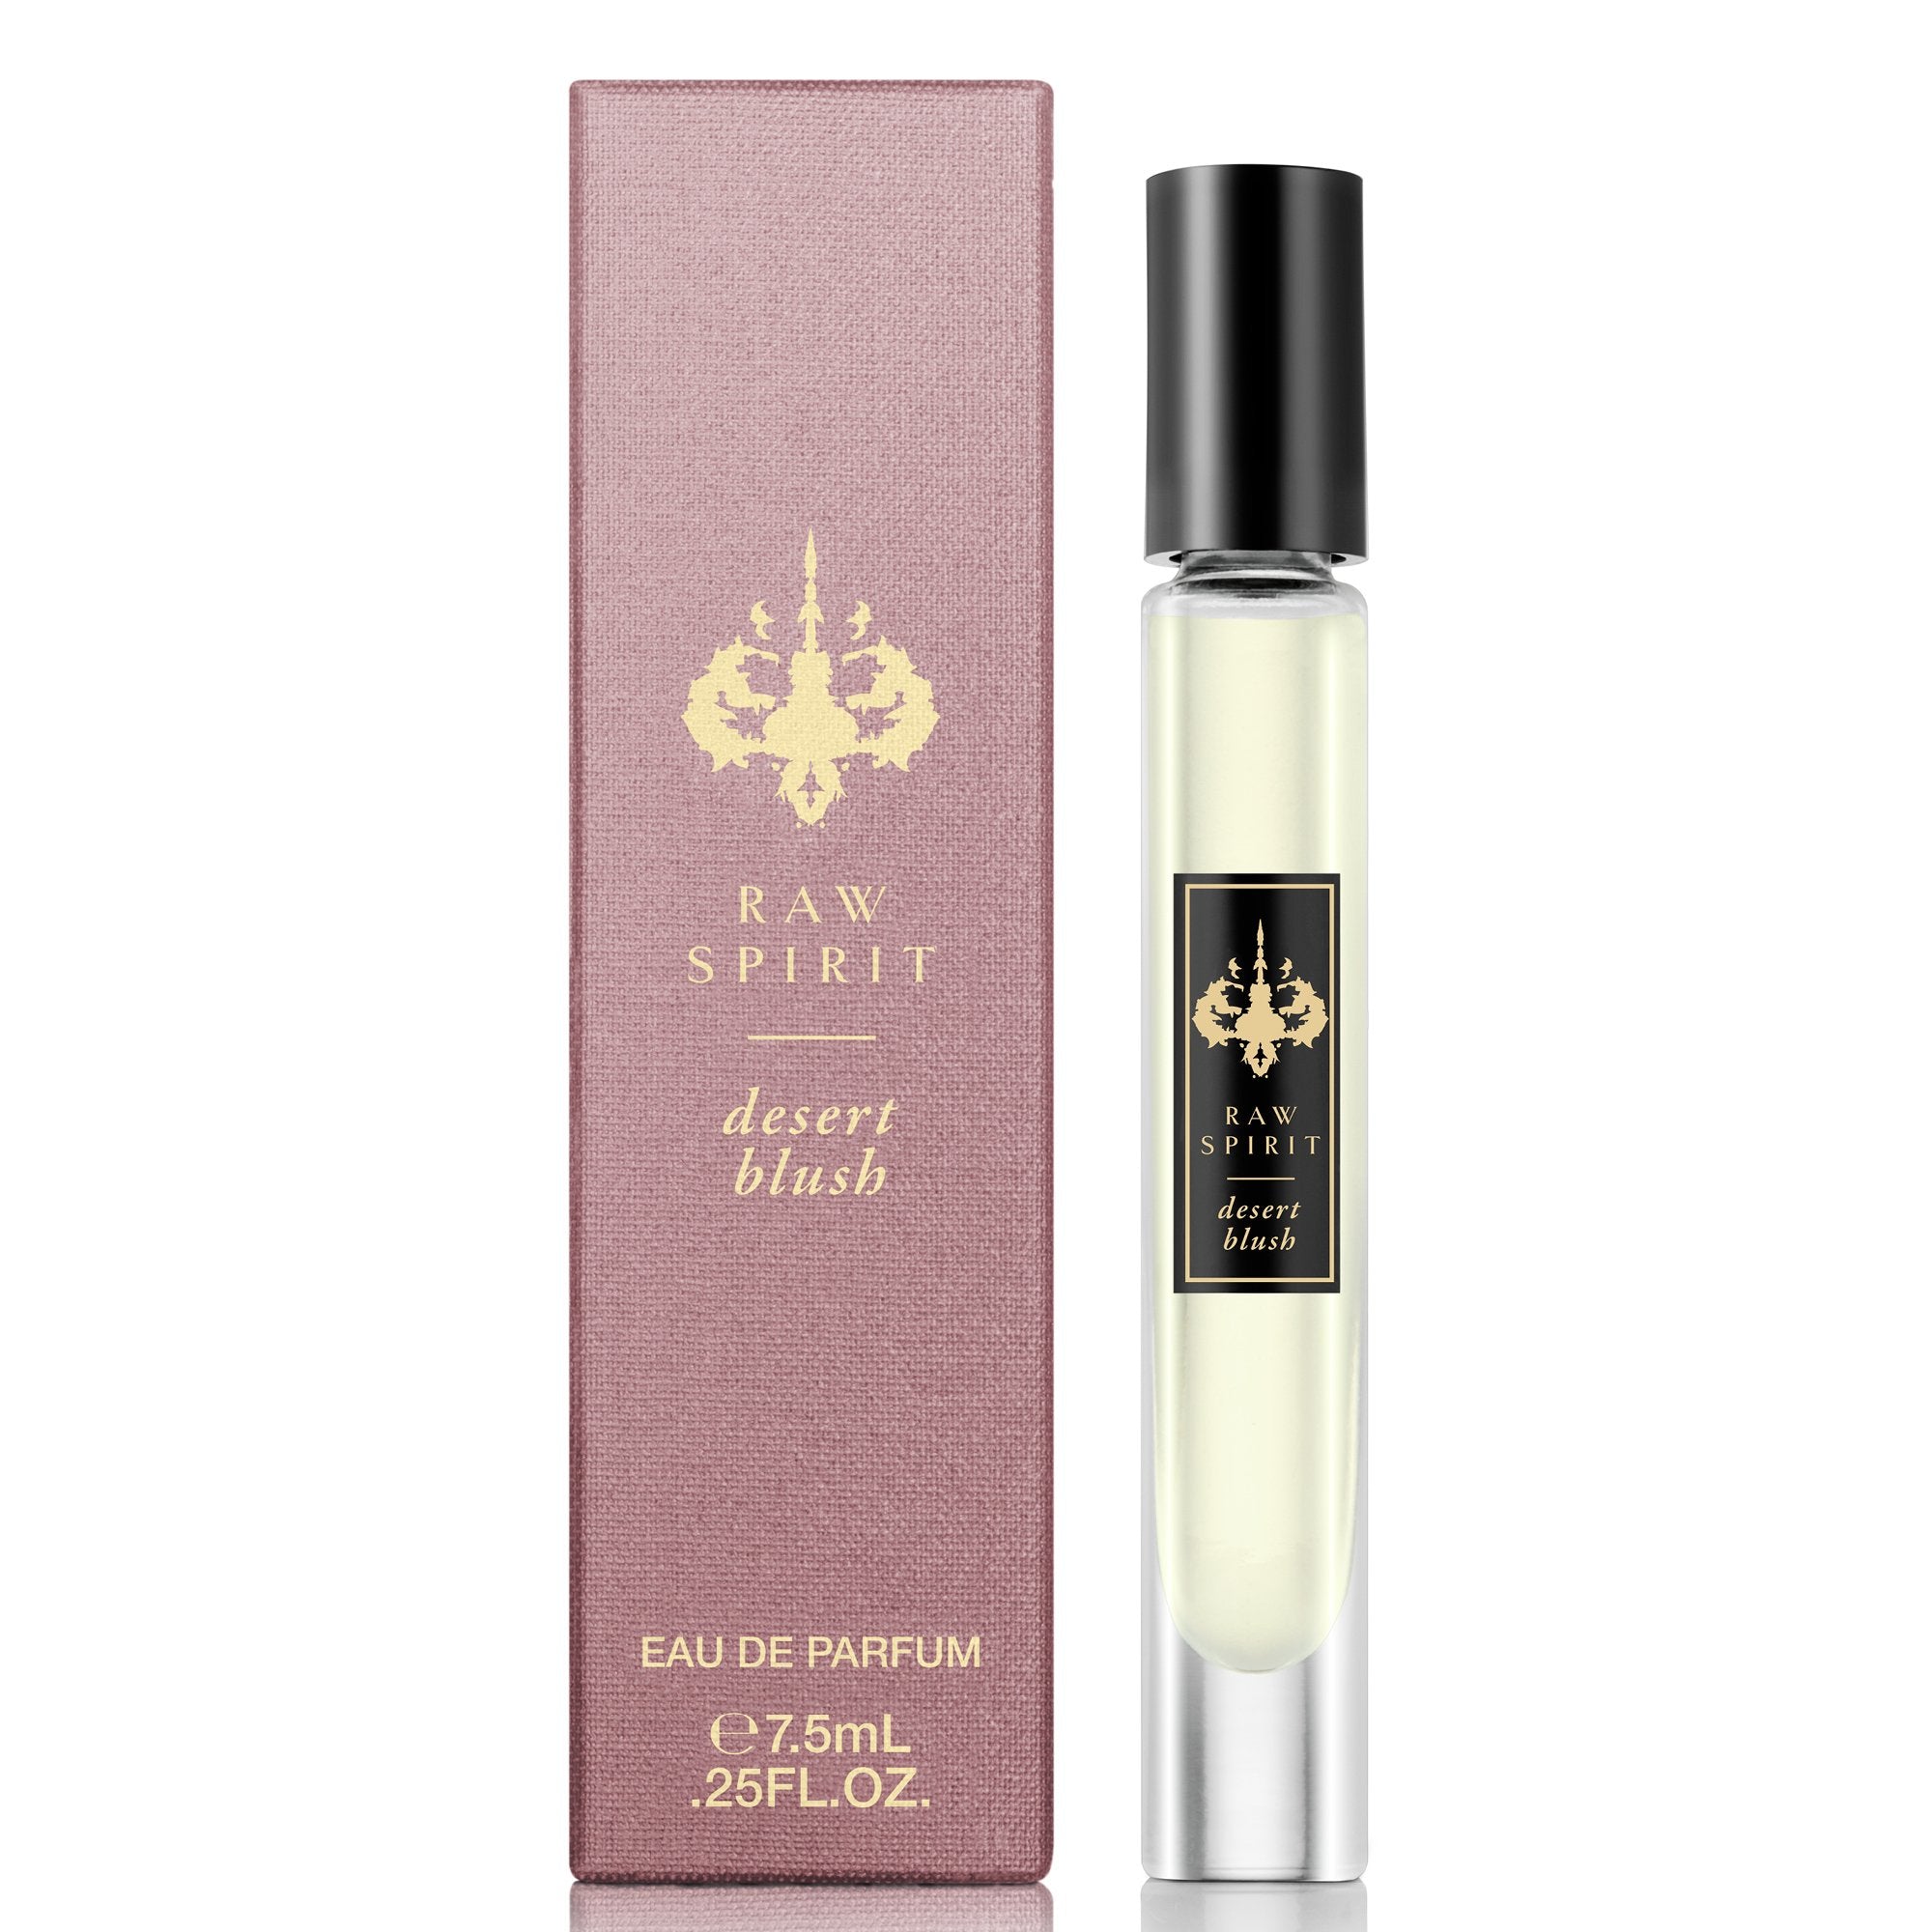 DESERT BLUSH Perfume, Eau de Parfum Rollerball 0.25 fl oz - Raw Spirit, Inc.